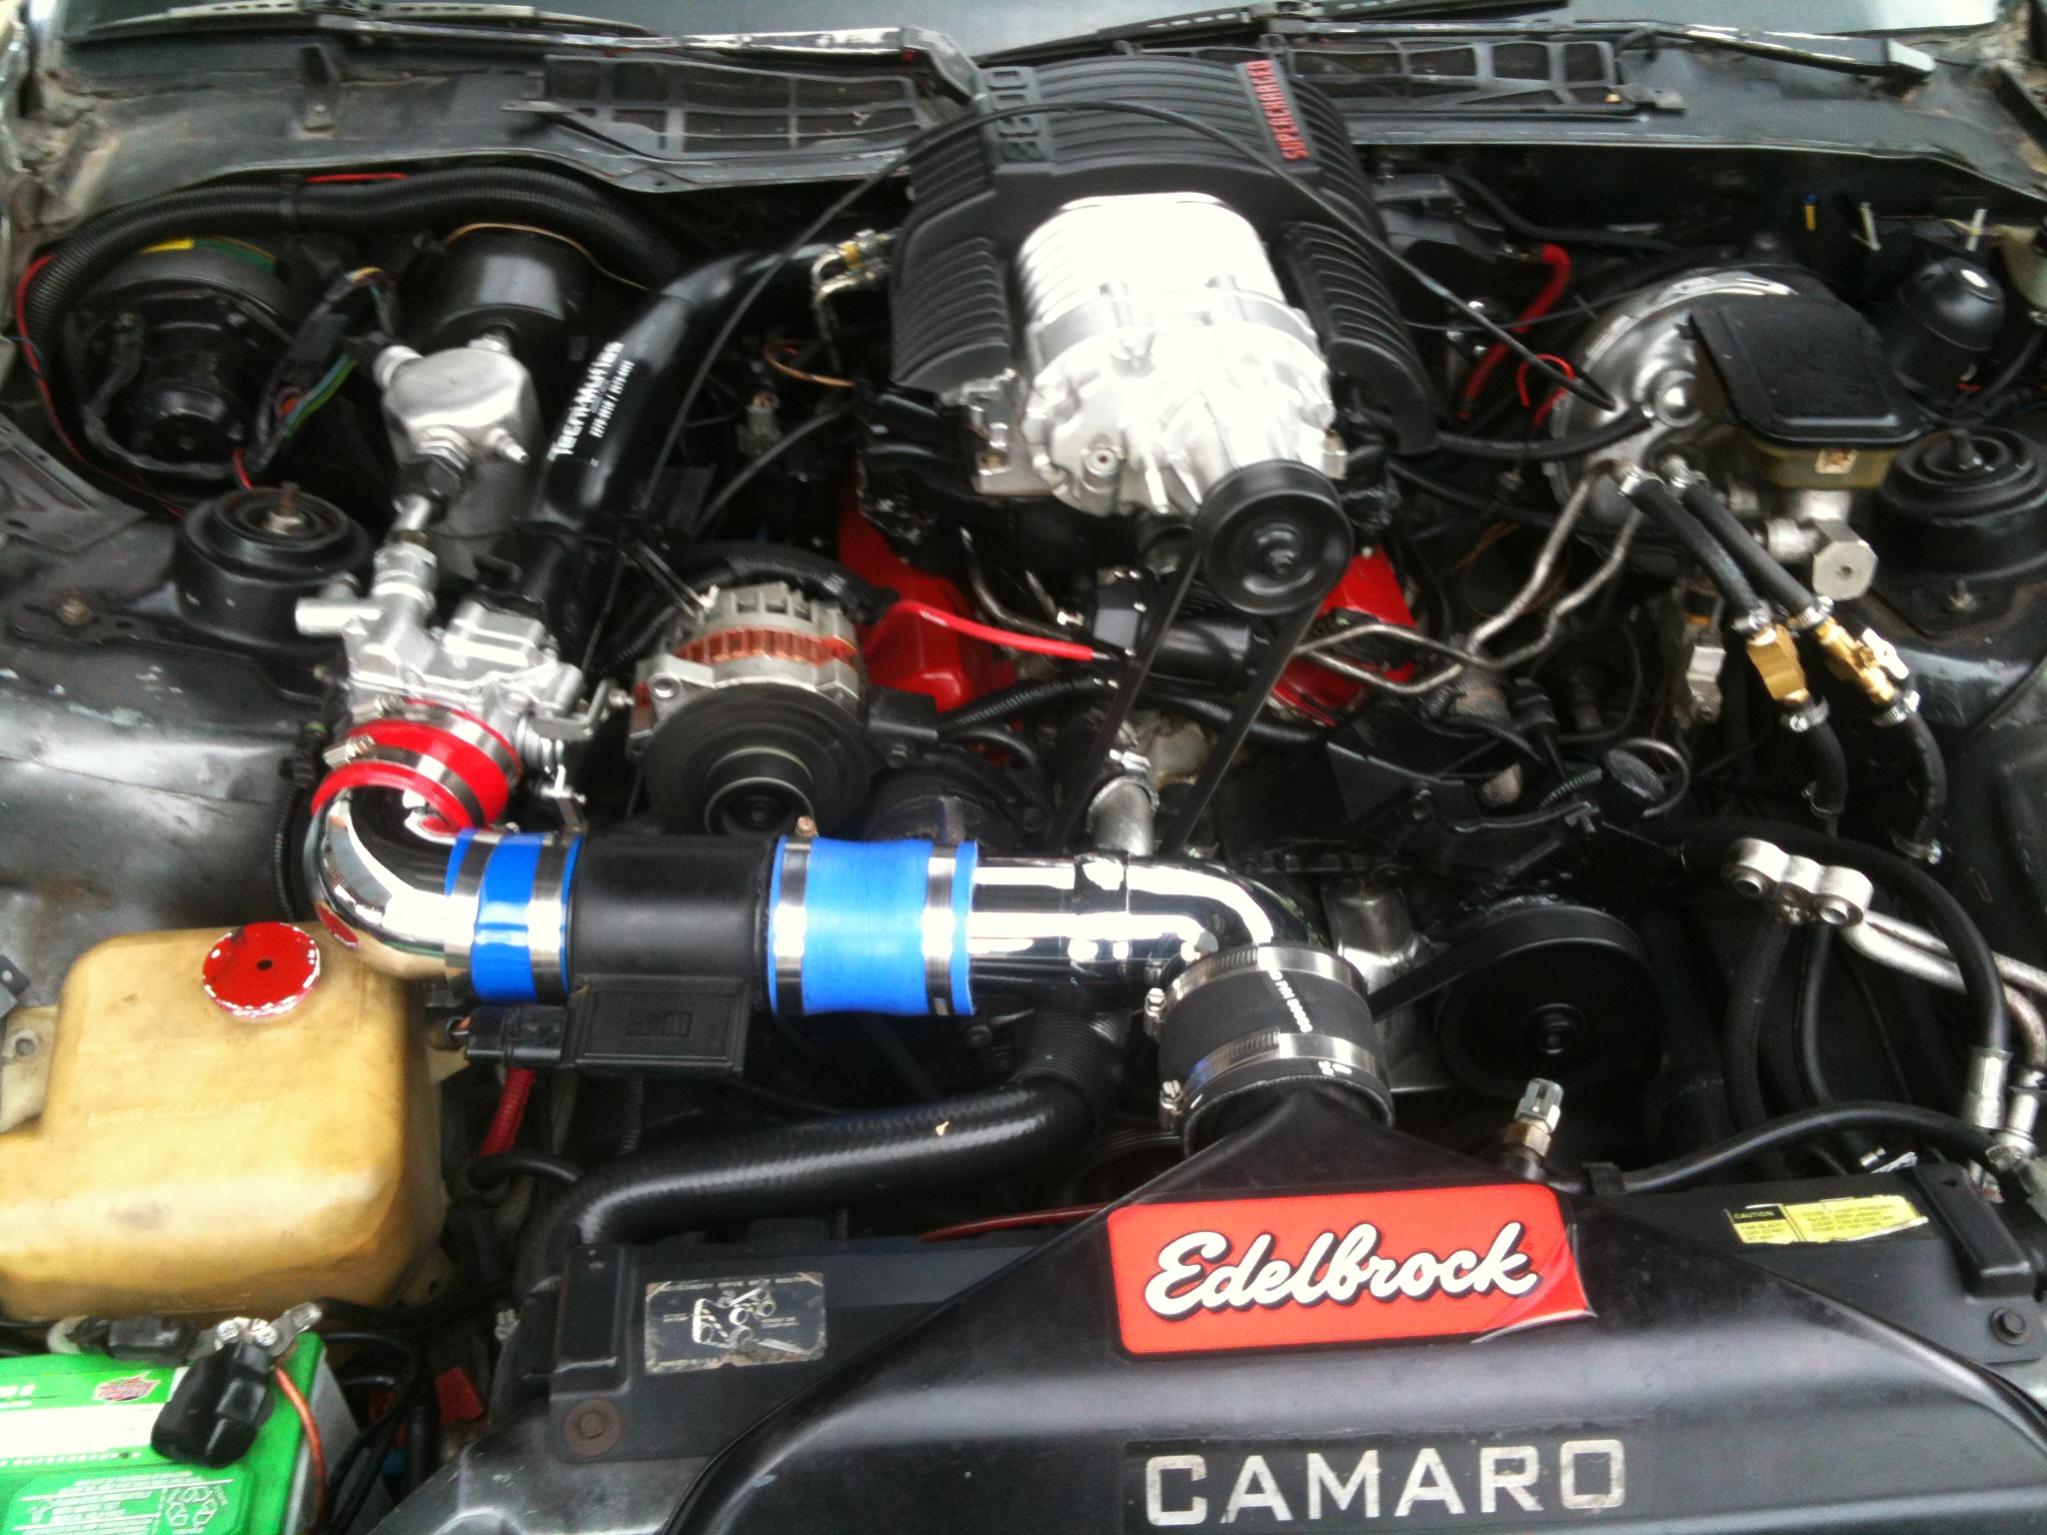 Camaro V6  Superchraged - Third Generation F-Body Message Boards